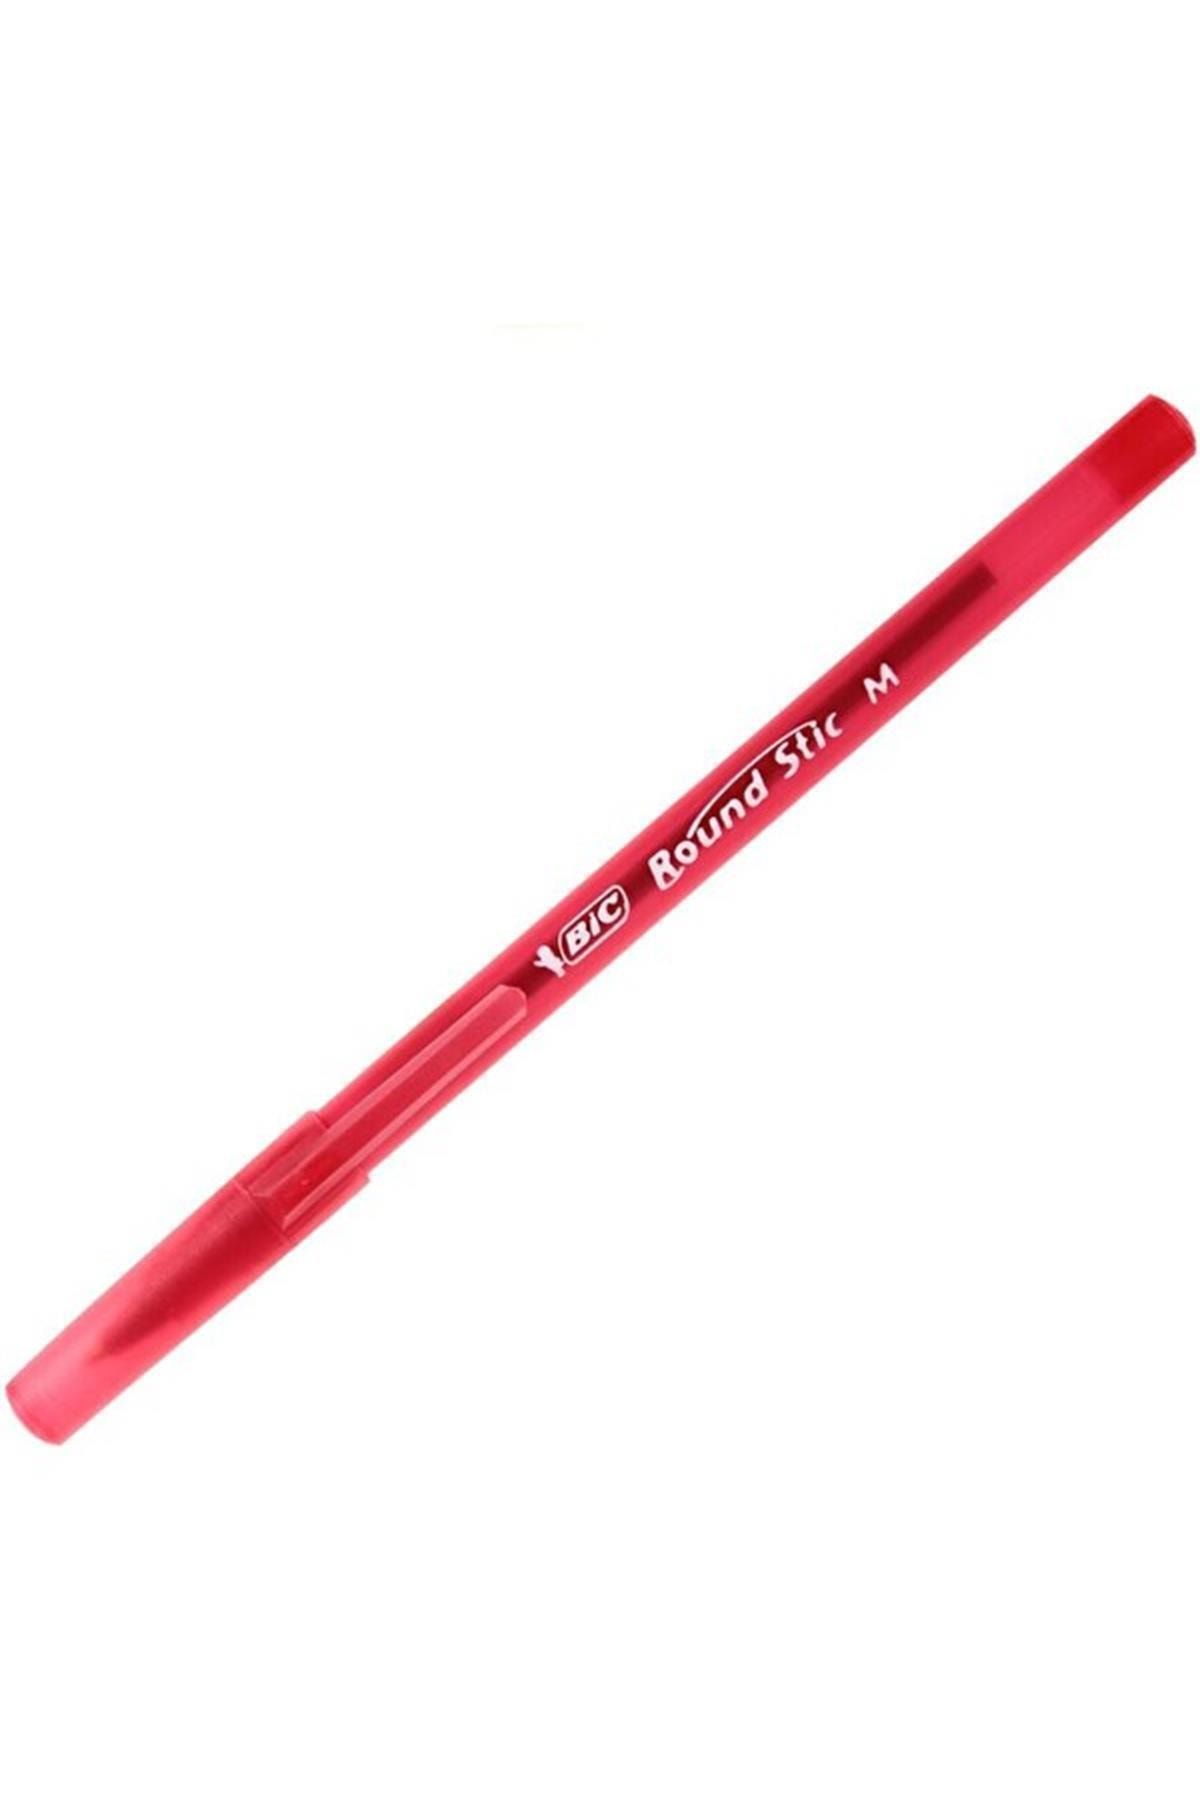 Bic Marka: Bıc Round Stıc Tükenmez Kalem Kırmızı 60'lı Paket Kategori: Tükenmez Kalemler